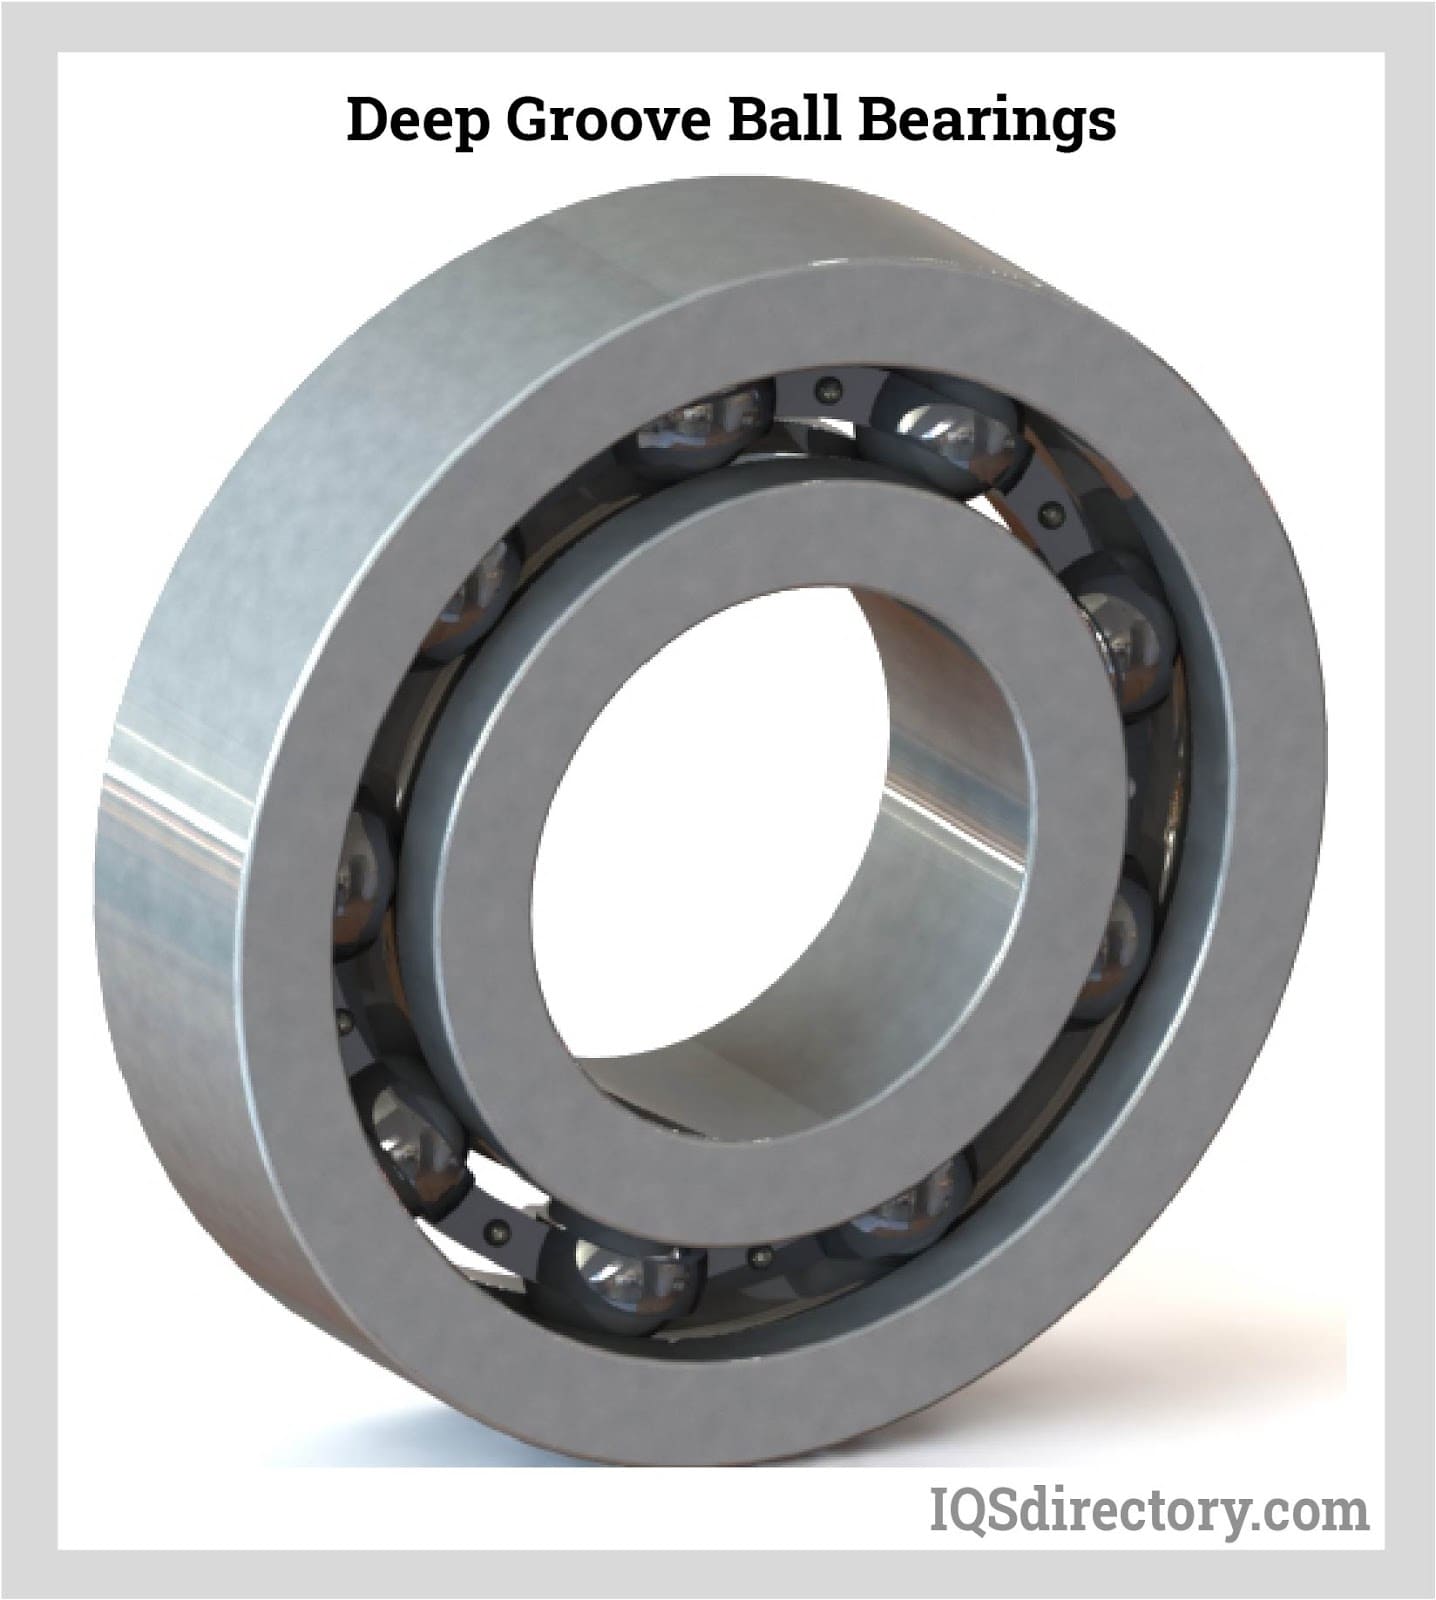 Deep Grove Ball Bearing